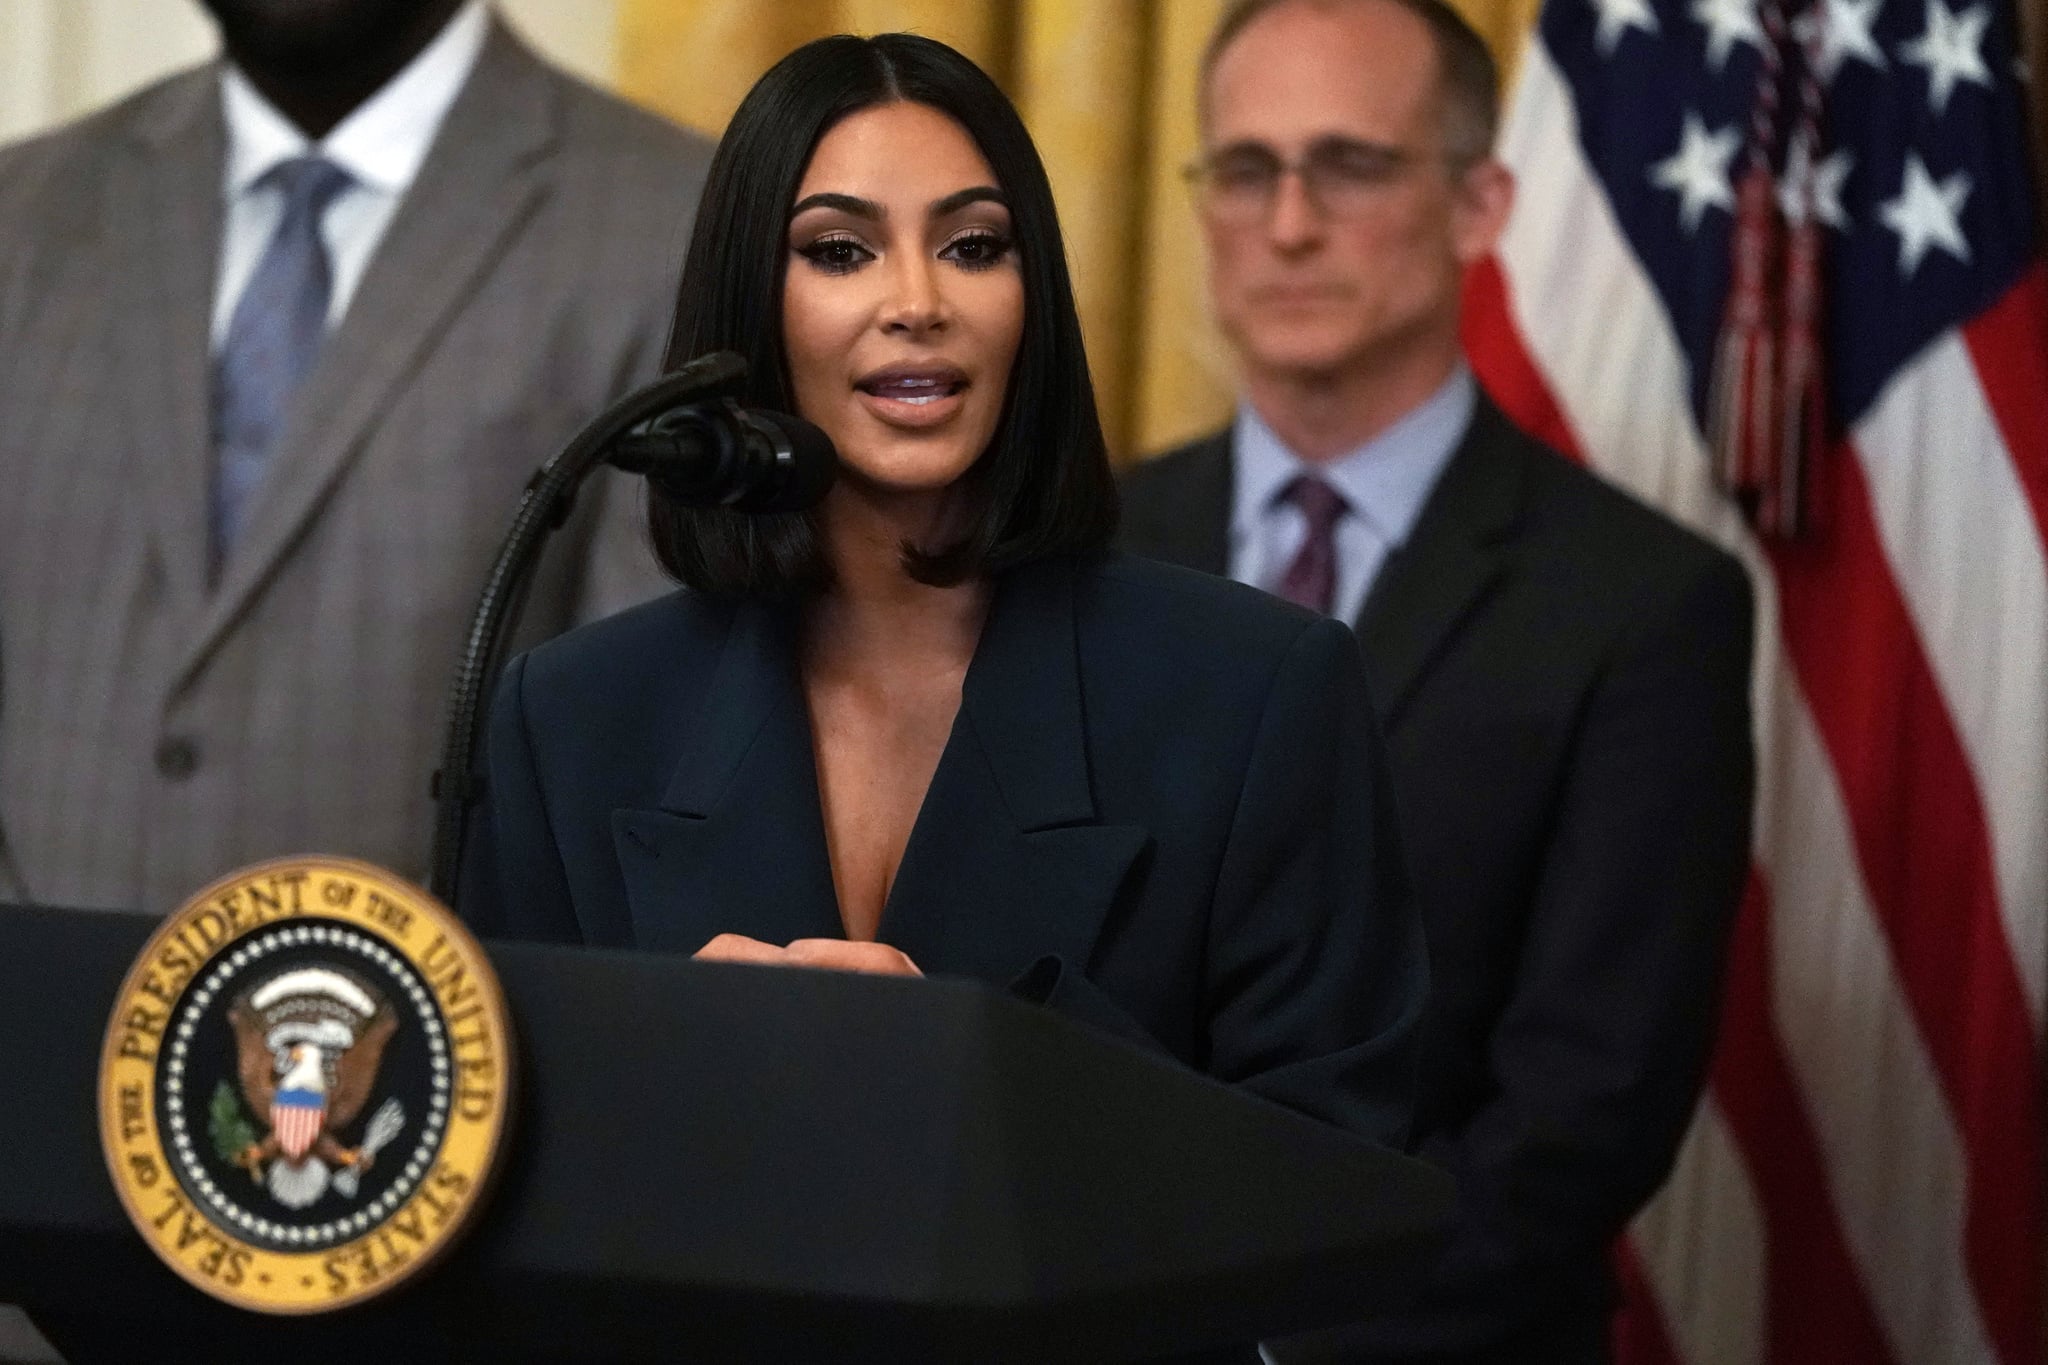 WASHINGTON, DC - JUNE 13: Kim Kardashian West speaks during the East Room event 